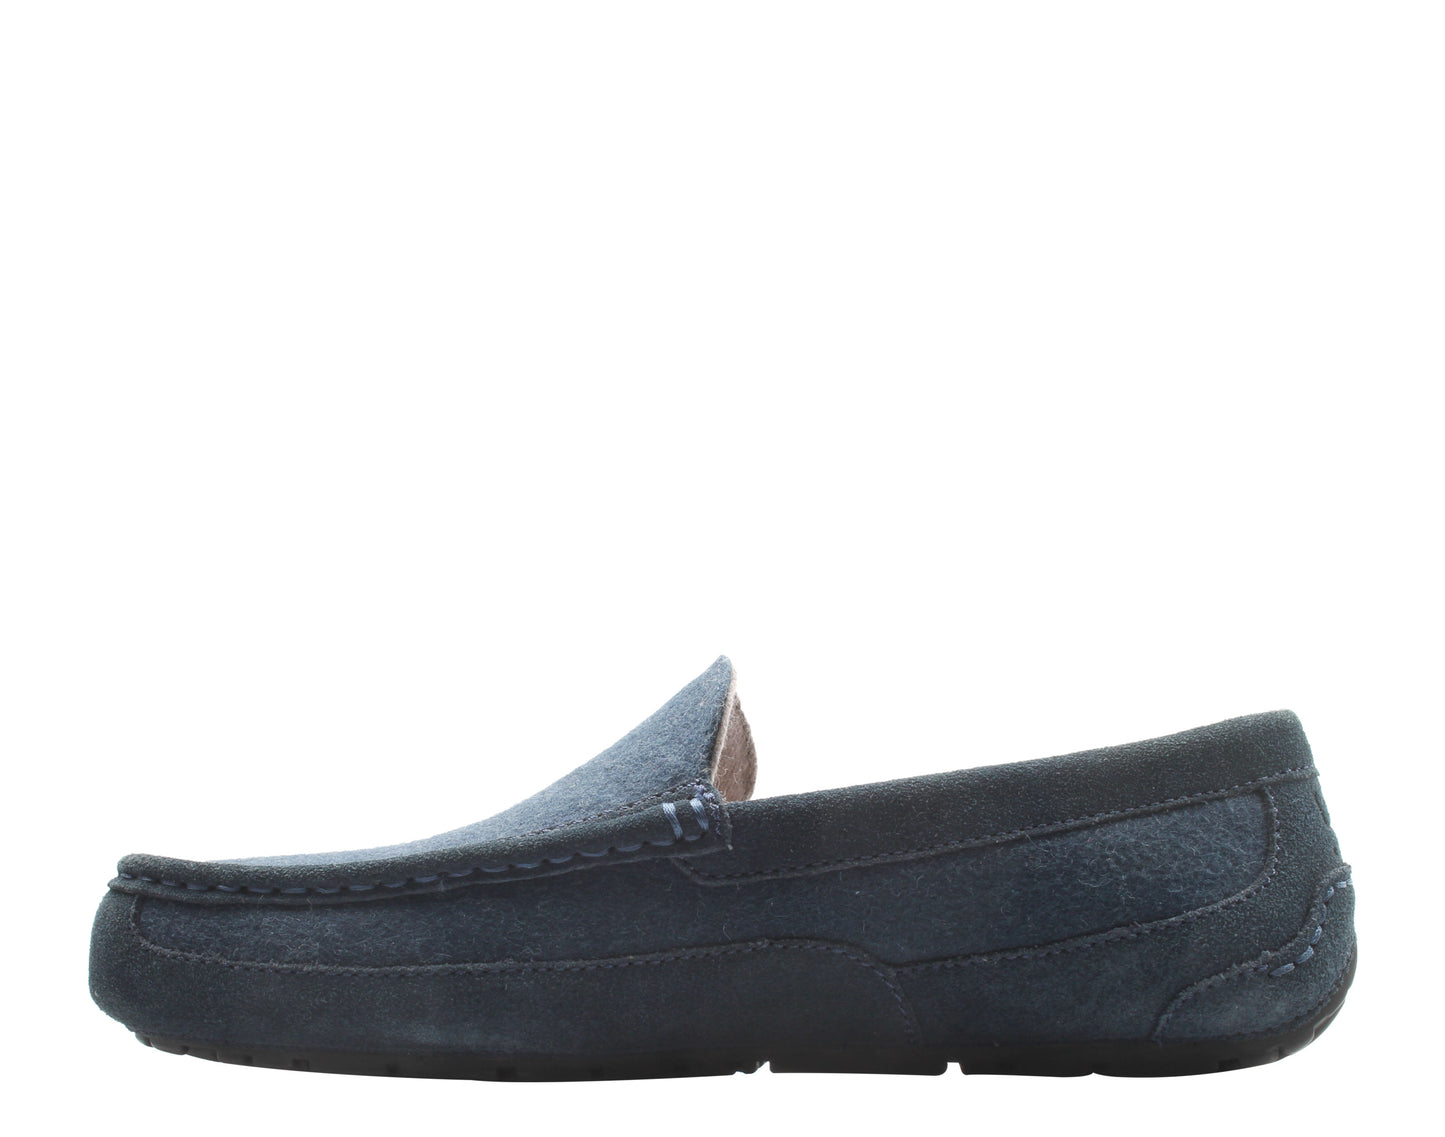 UGG Australia Alder Wool Slip-On Laofer Imperial Grey Men's Shoes 1004539-IMP